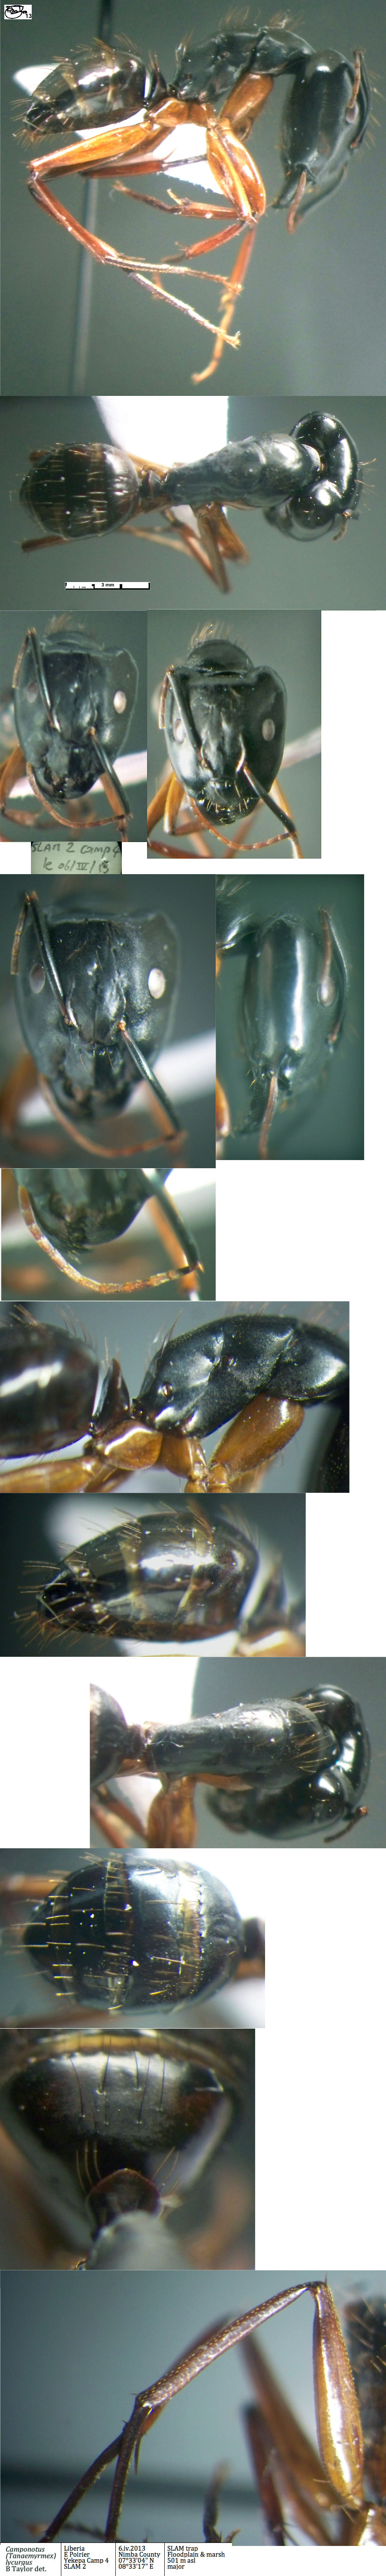 {Camponotus lycurgus major}